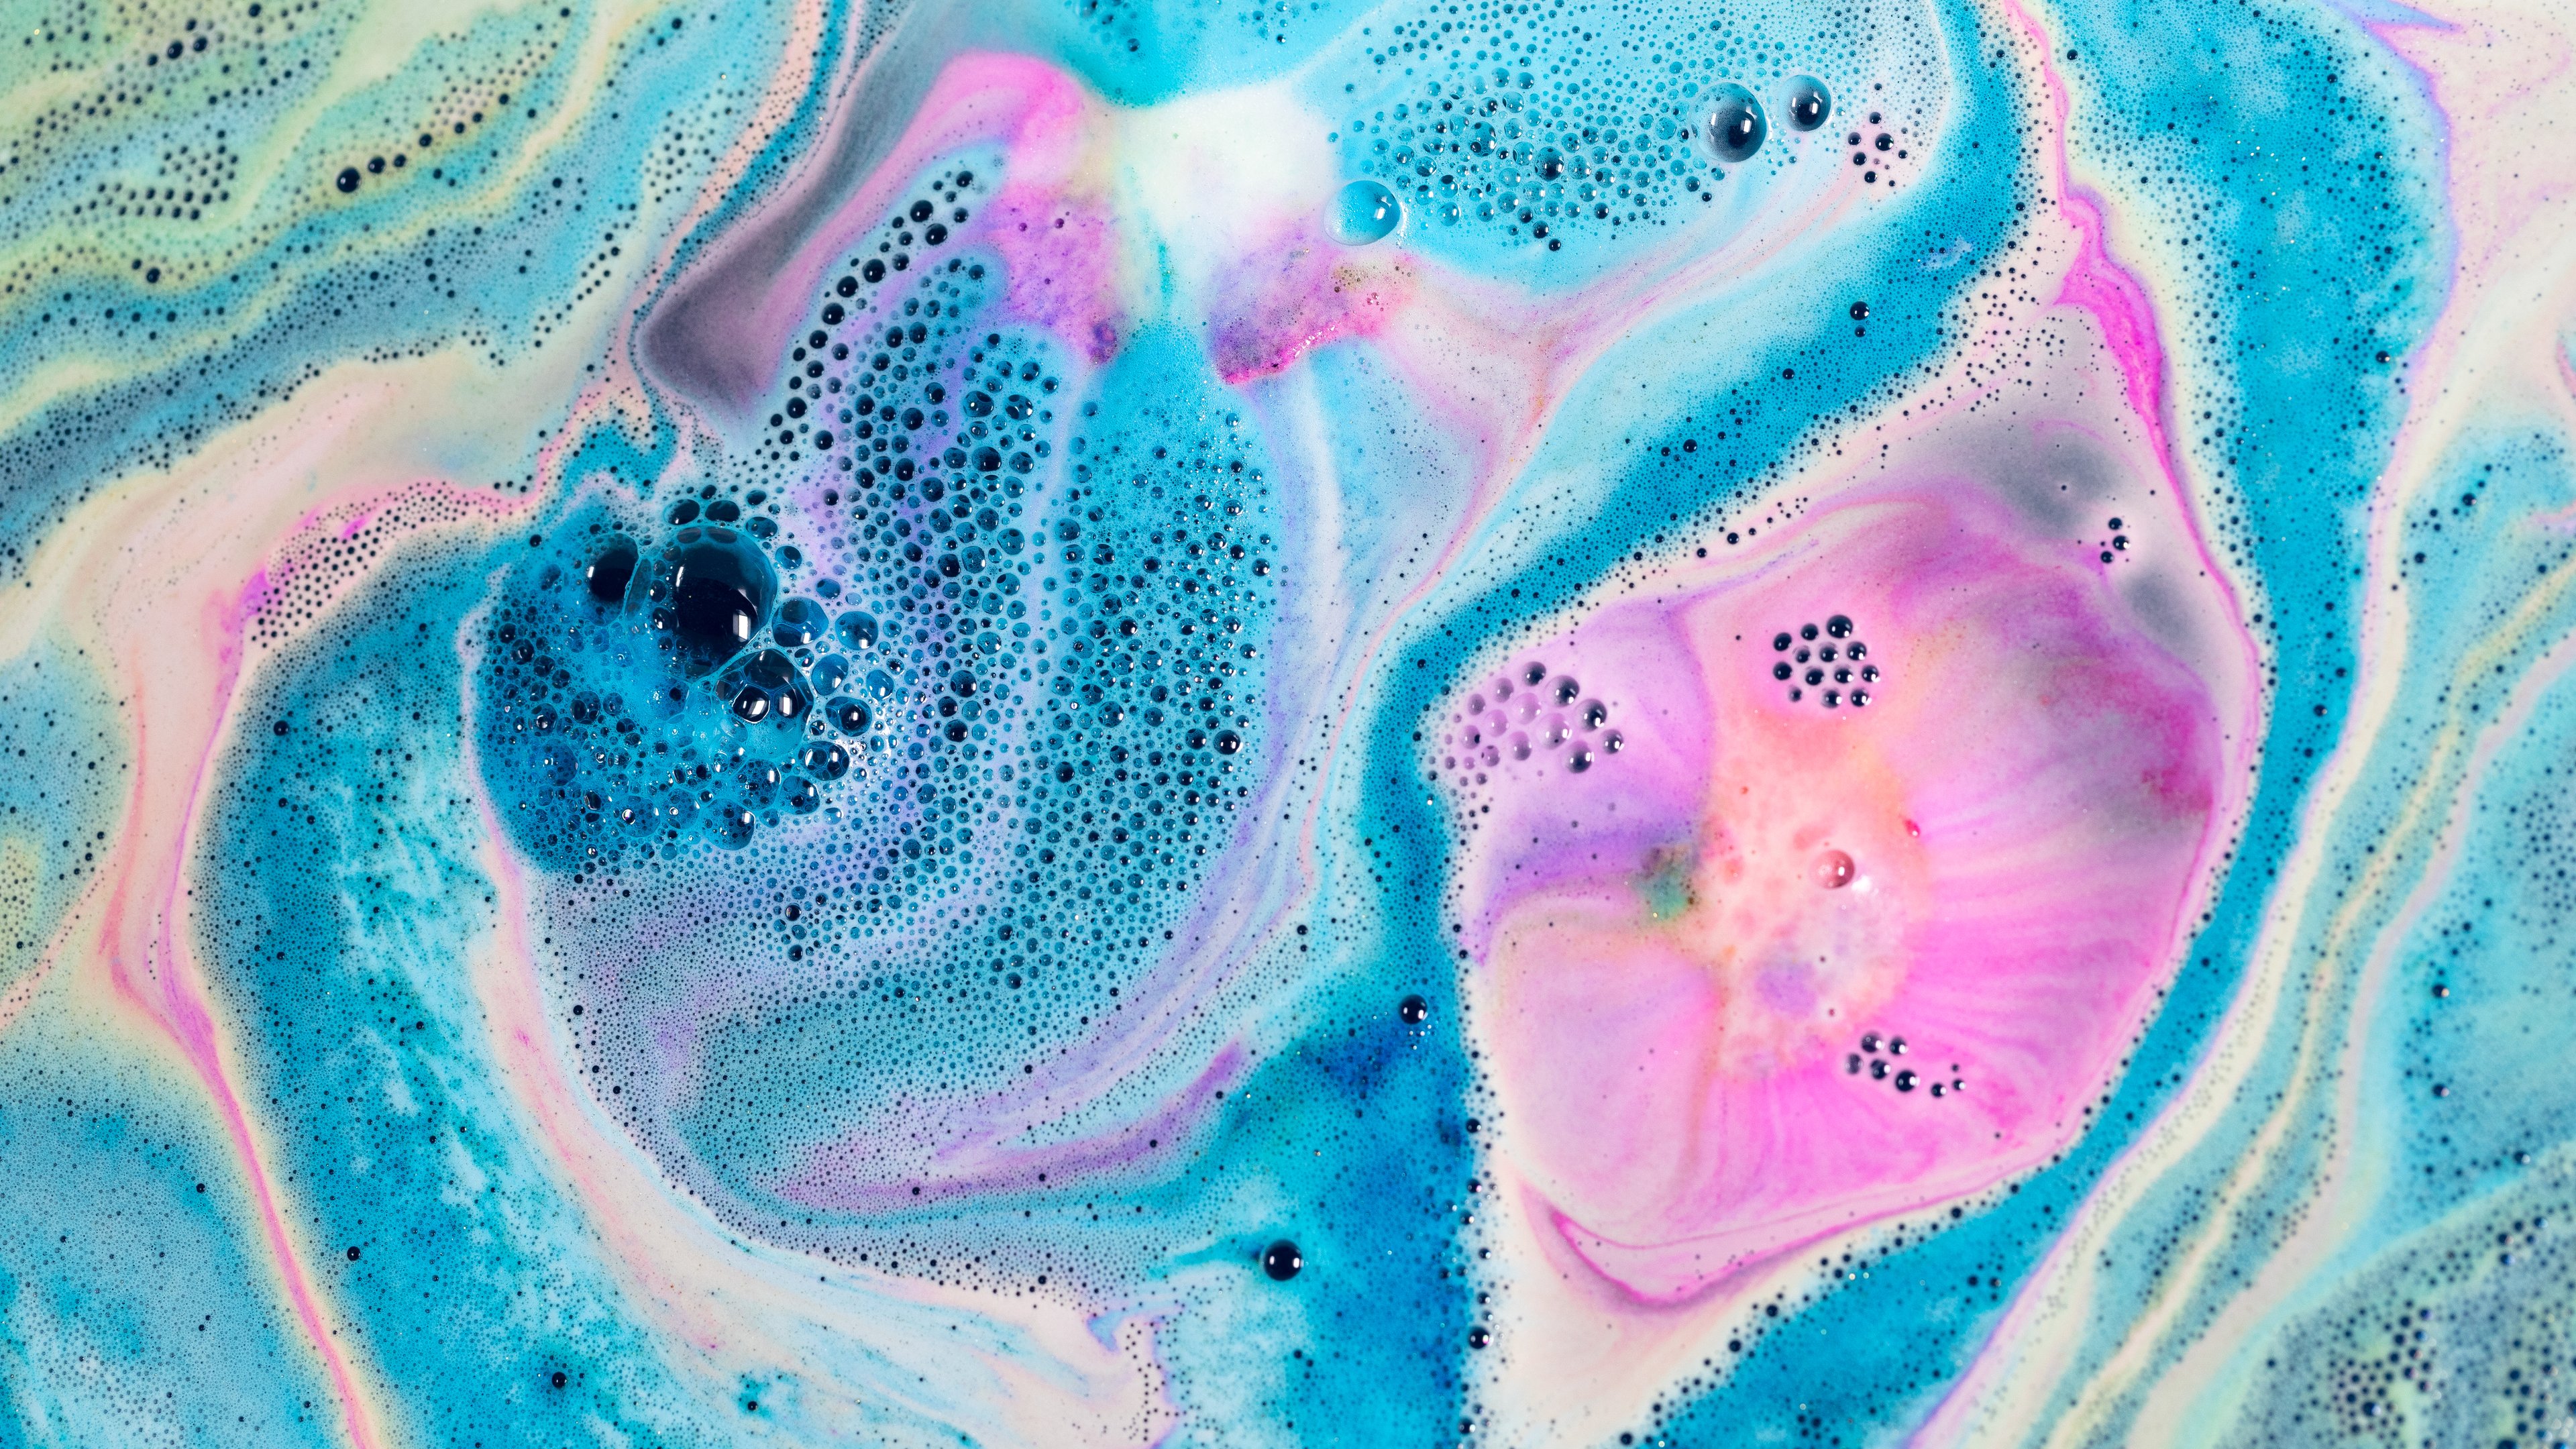 Intergalactic Bath Bomb creates a foamy galaxy of blue and pink swirls.